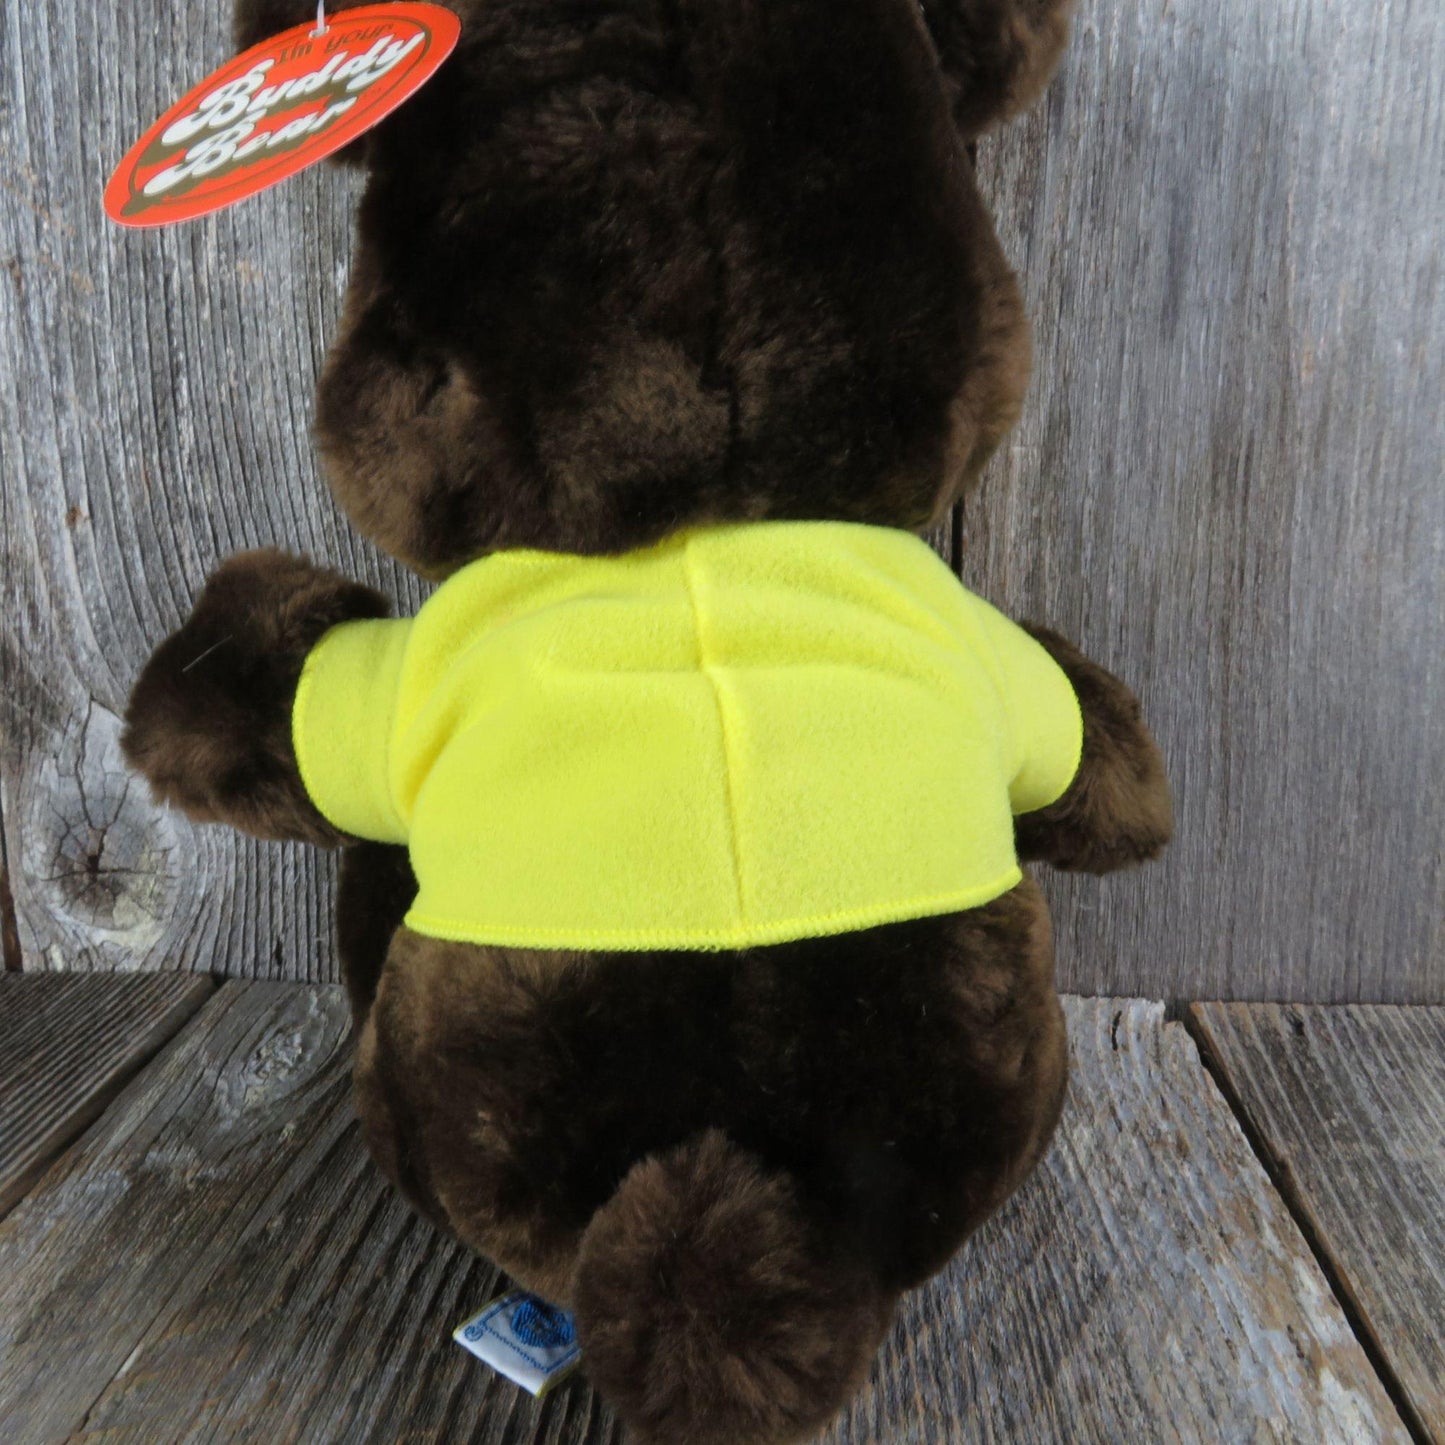 Vintage Buddy Bear Plush UCLA Bruins Brown Teddy Stuffed Animal Dakin 1976